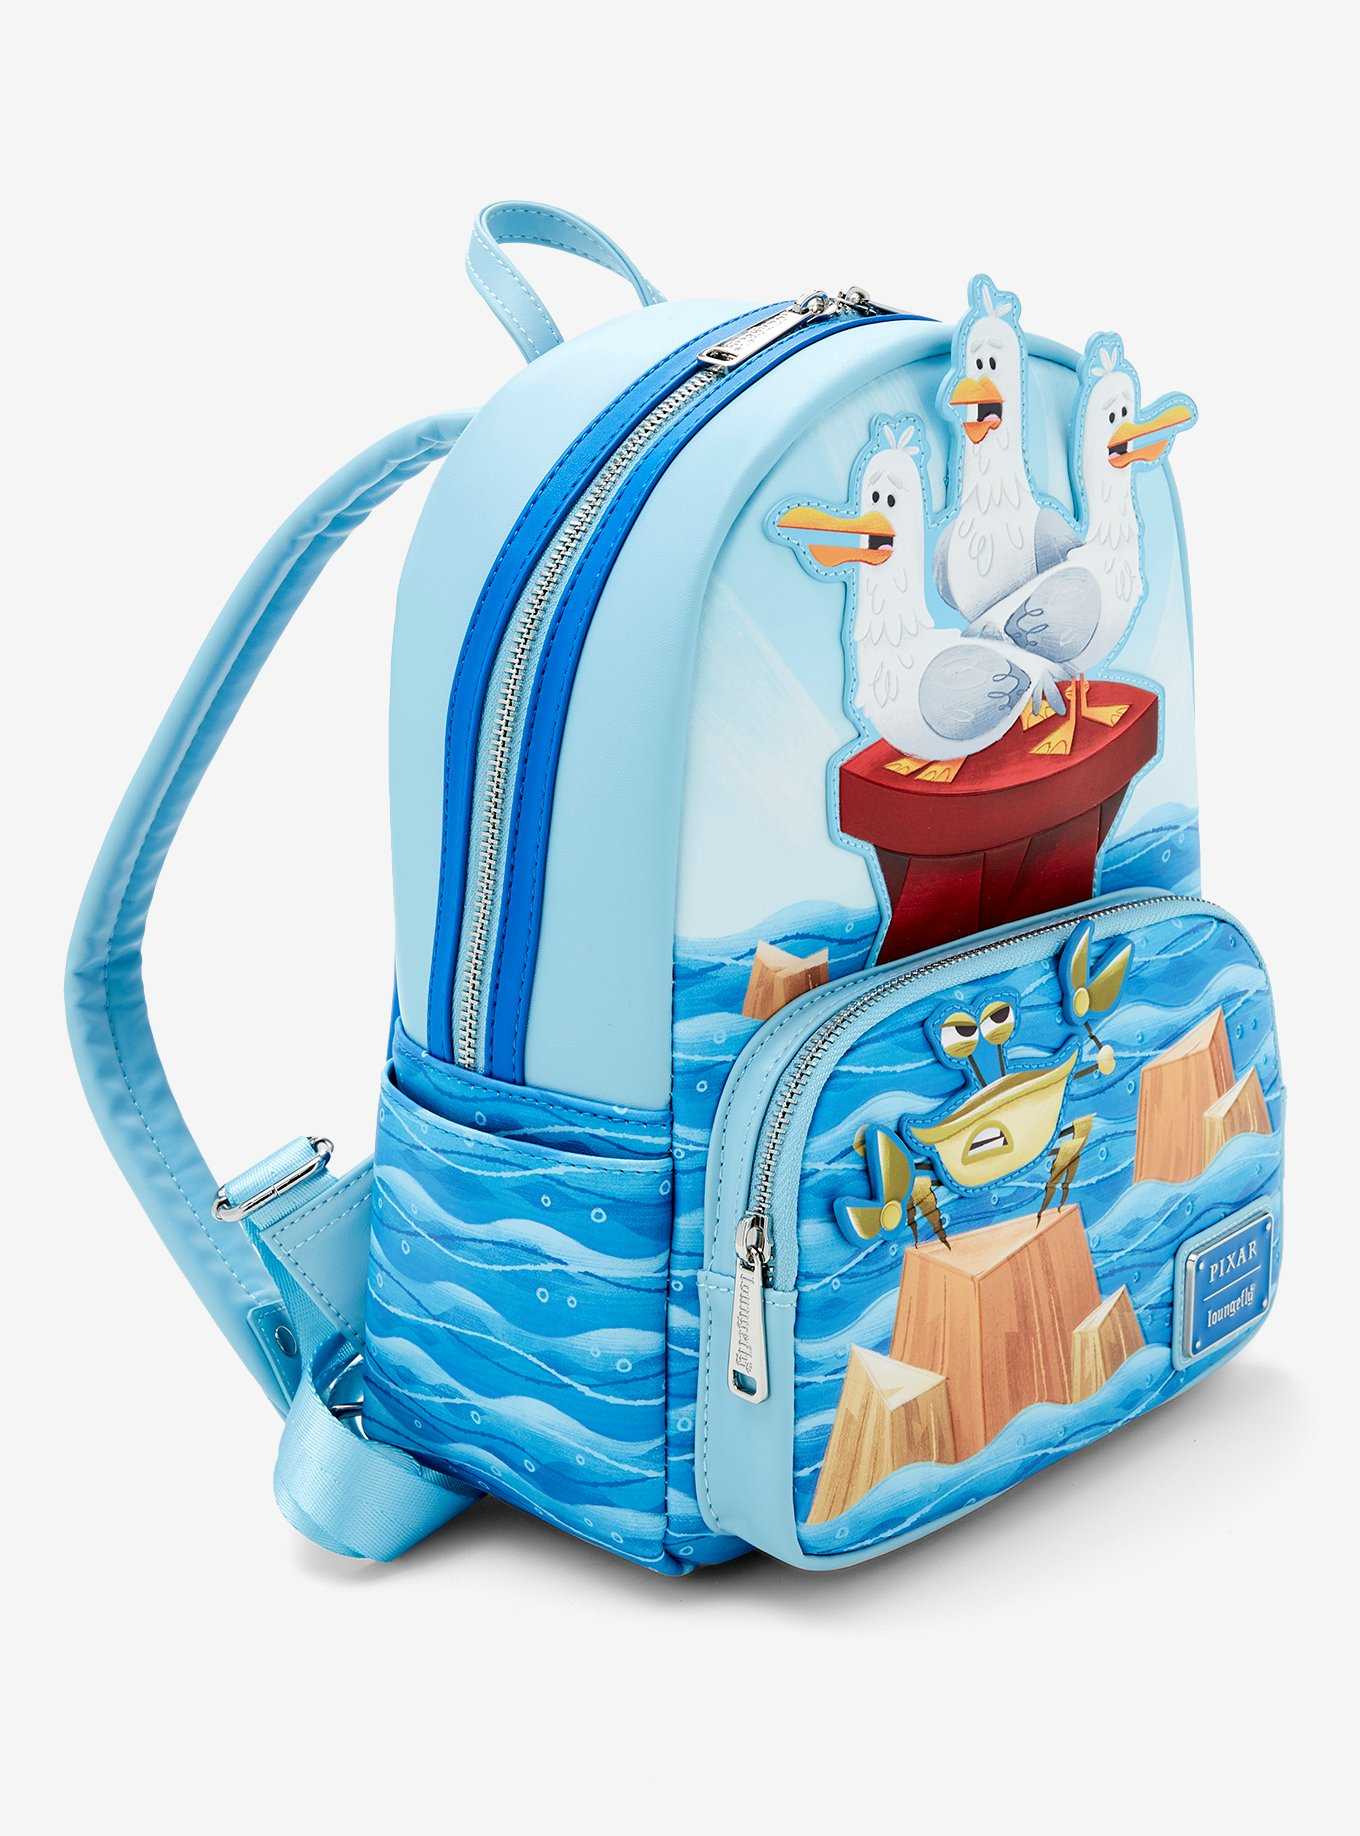 Loungefly Disney Pixar Finding Nemo Seagulls & Crab Mini Backpack, , hi-res